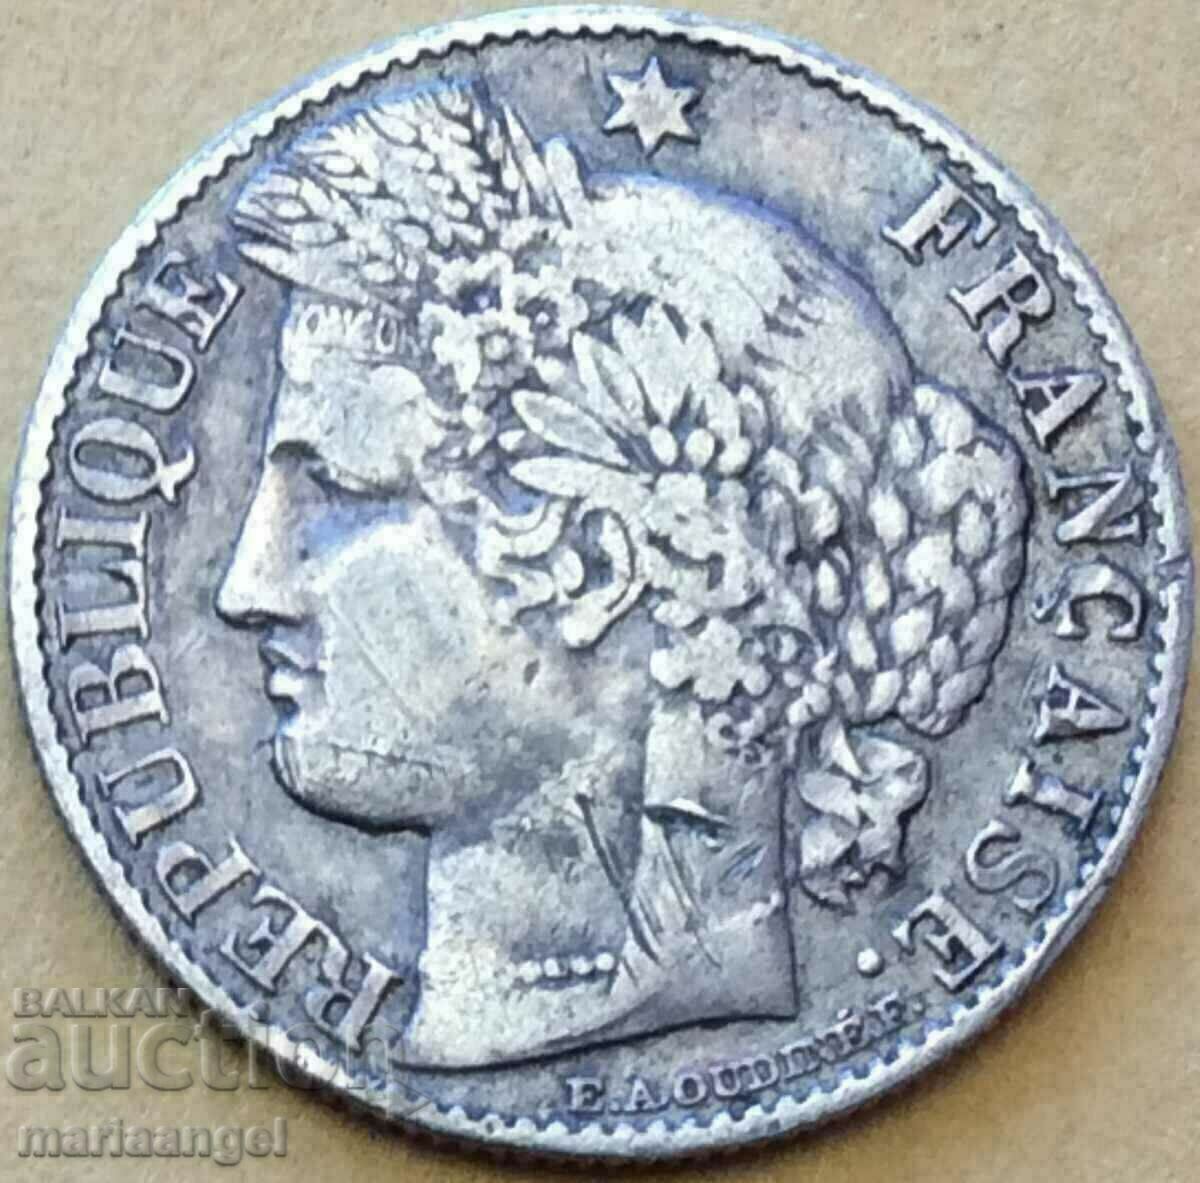 France 50 centimes 1894 silver - rare